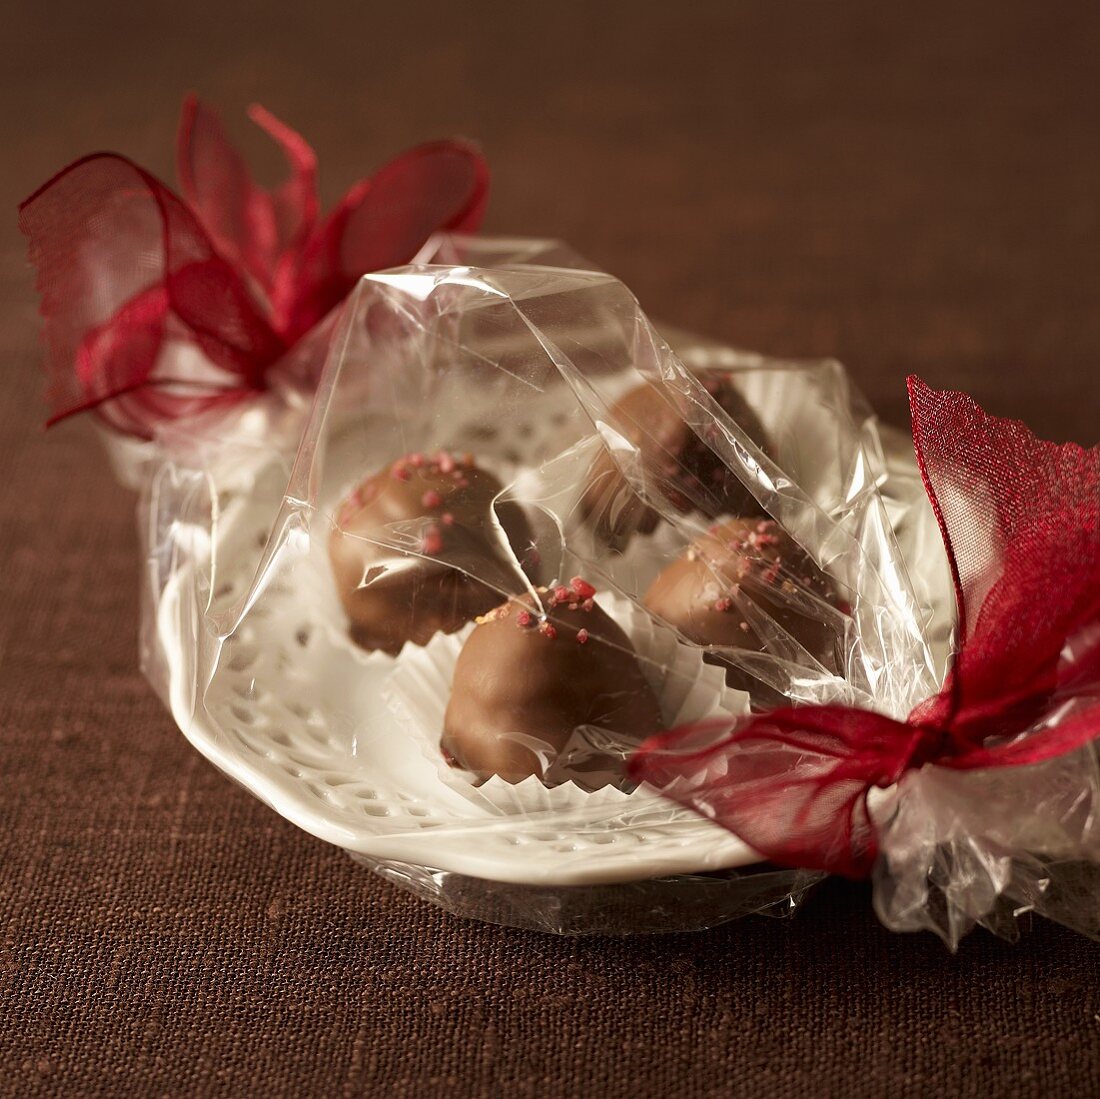 Raspberry chocolates, gift-wrapped